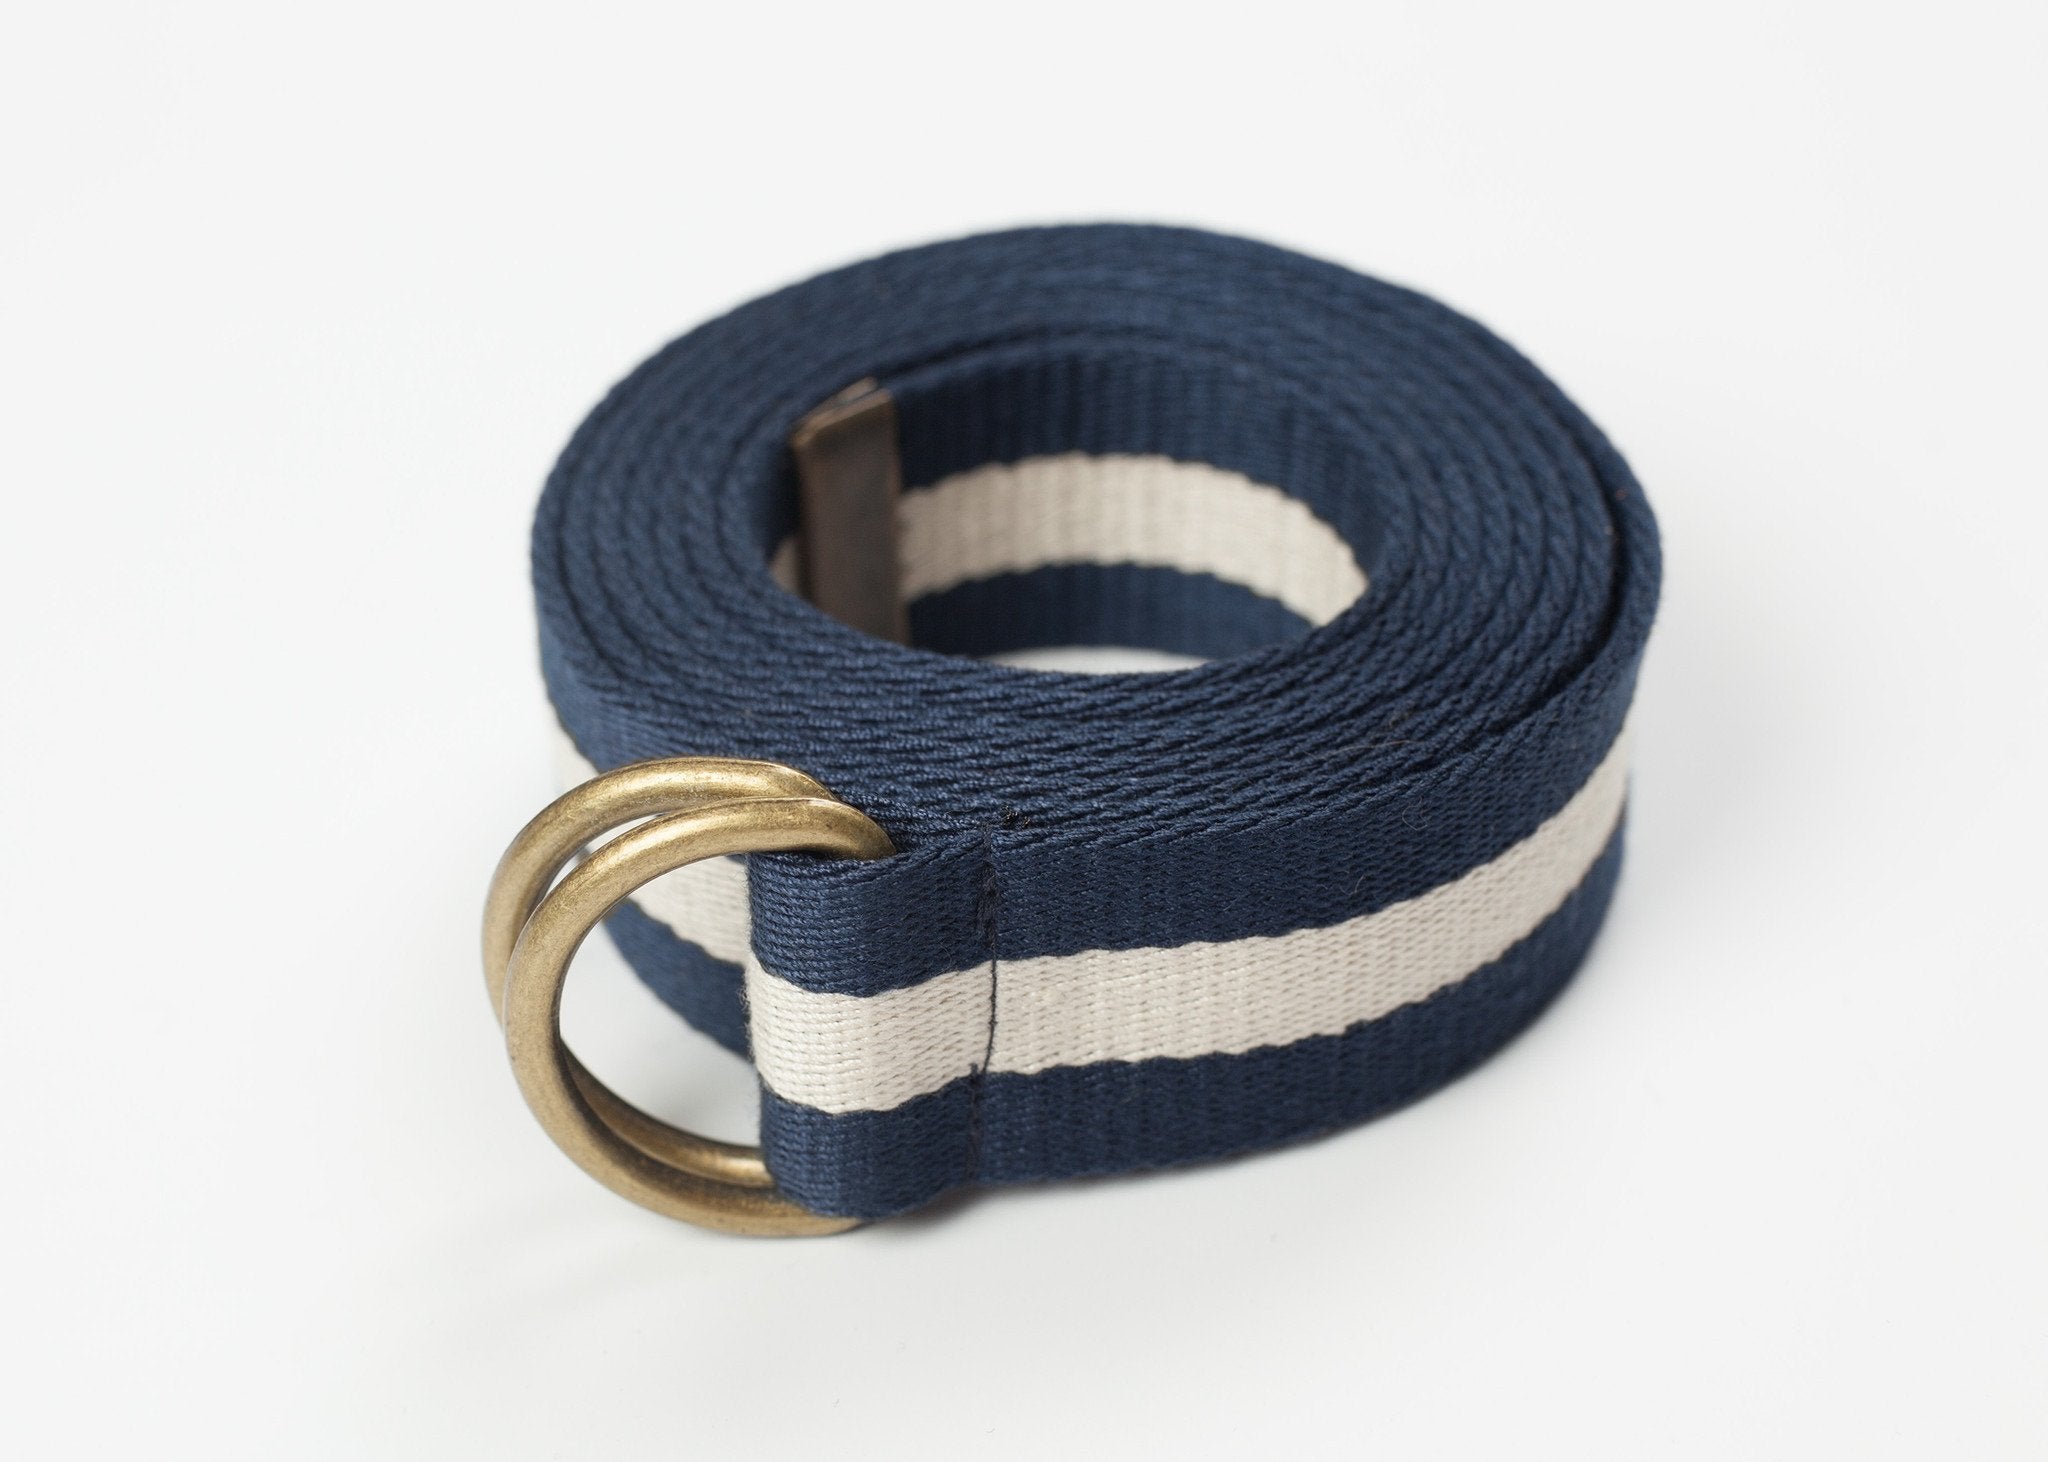 Striped Web Belt in Navy/White